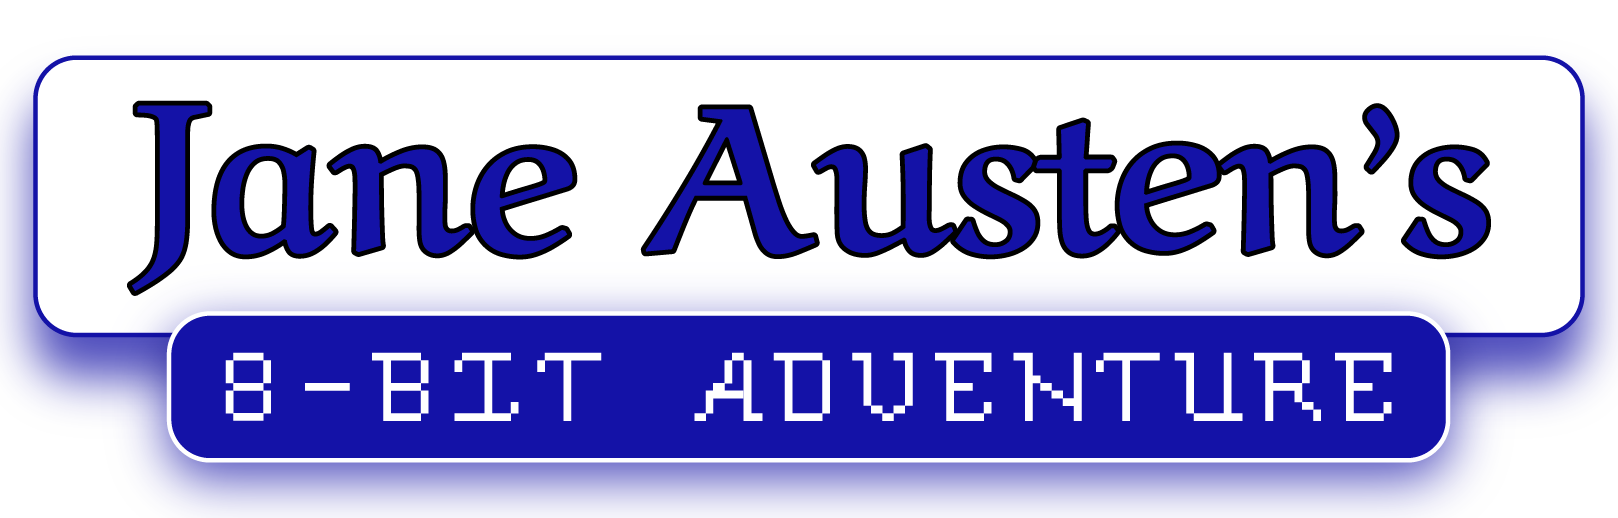 Jane Austen's 8-bit Adventure